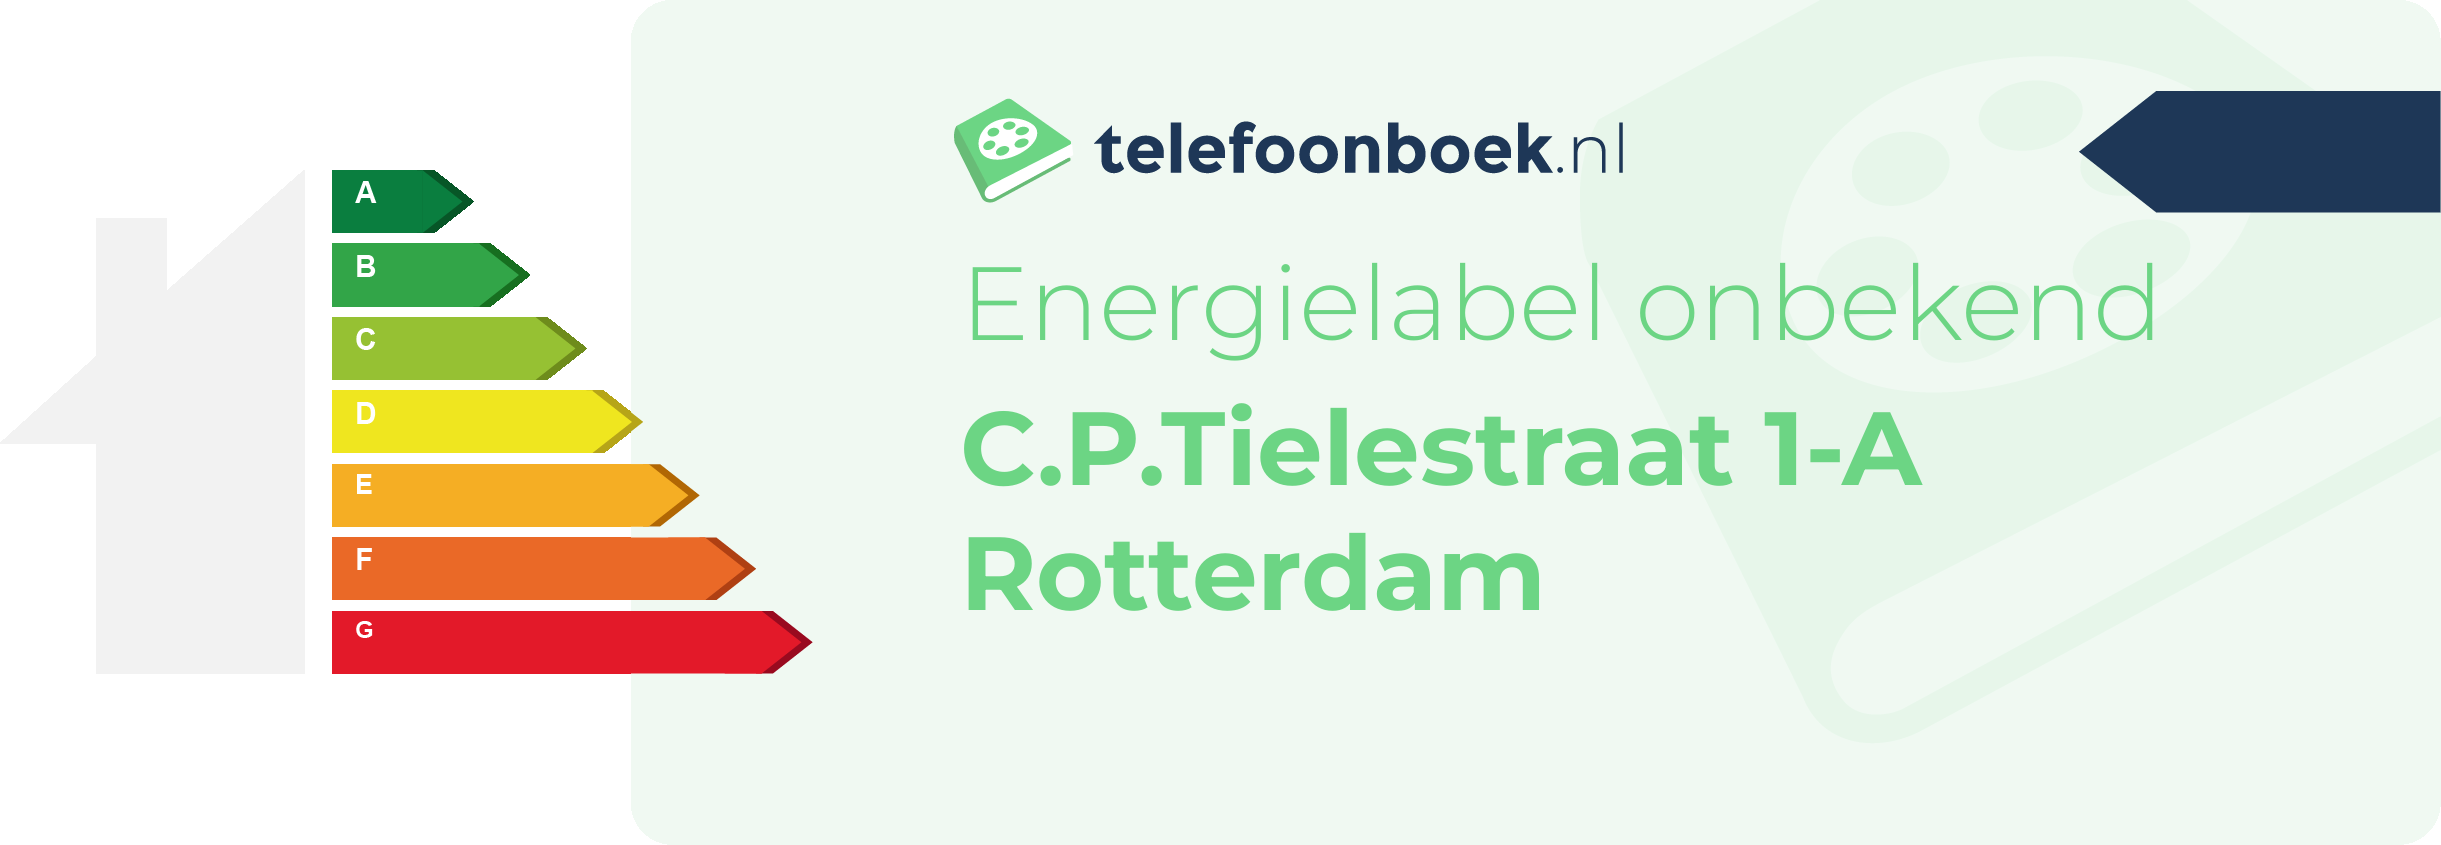 Energielabel C.P.Tielestraat 1-A Rotterdam